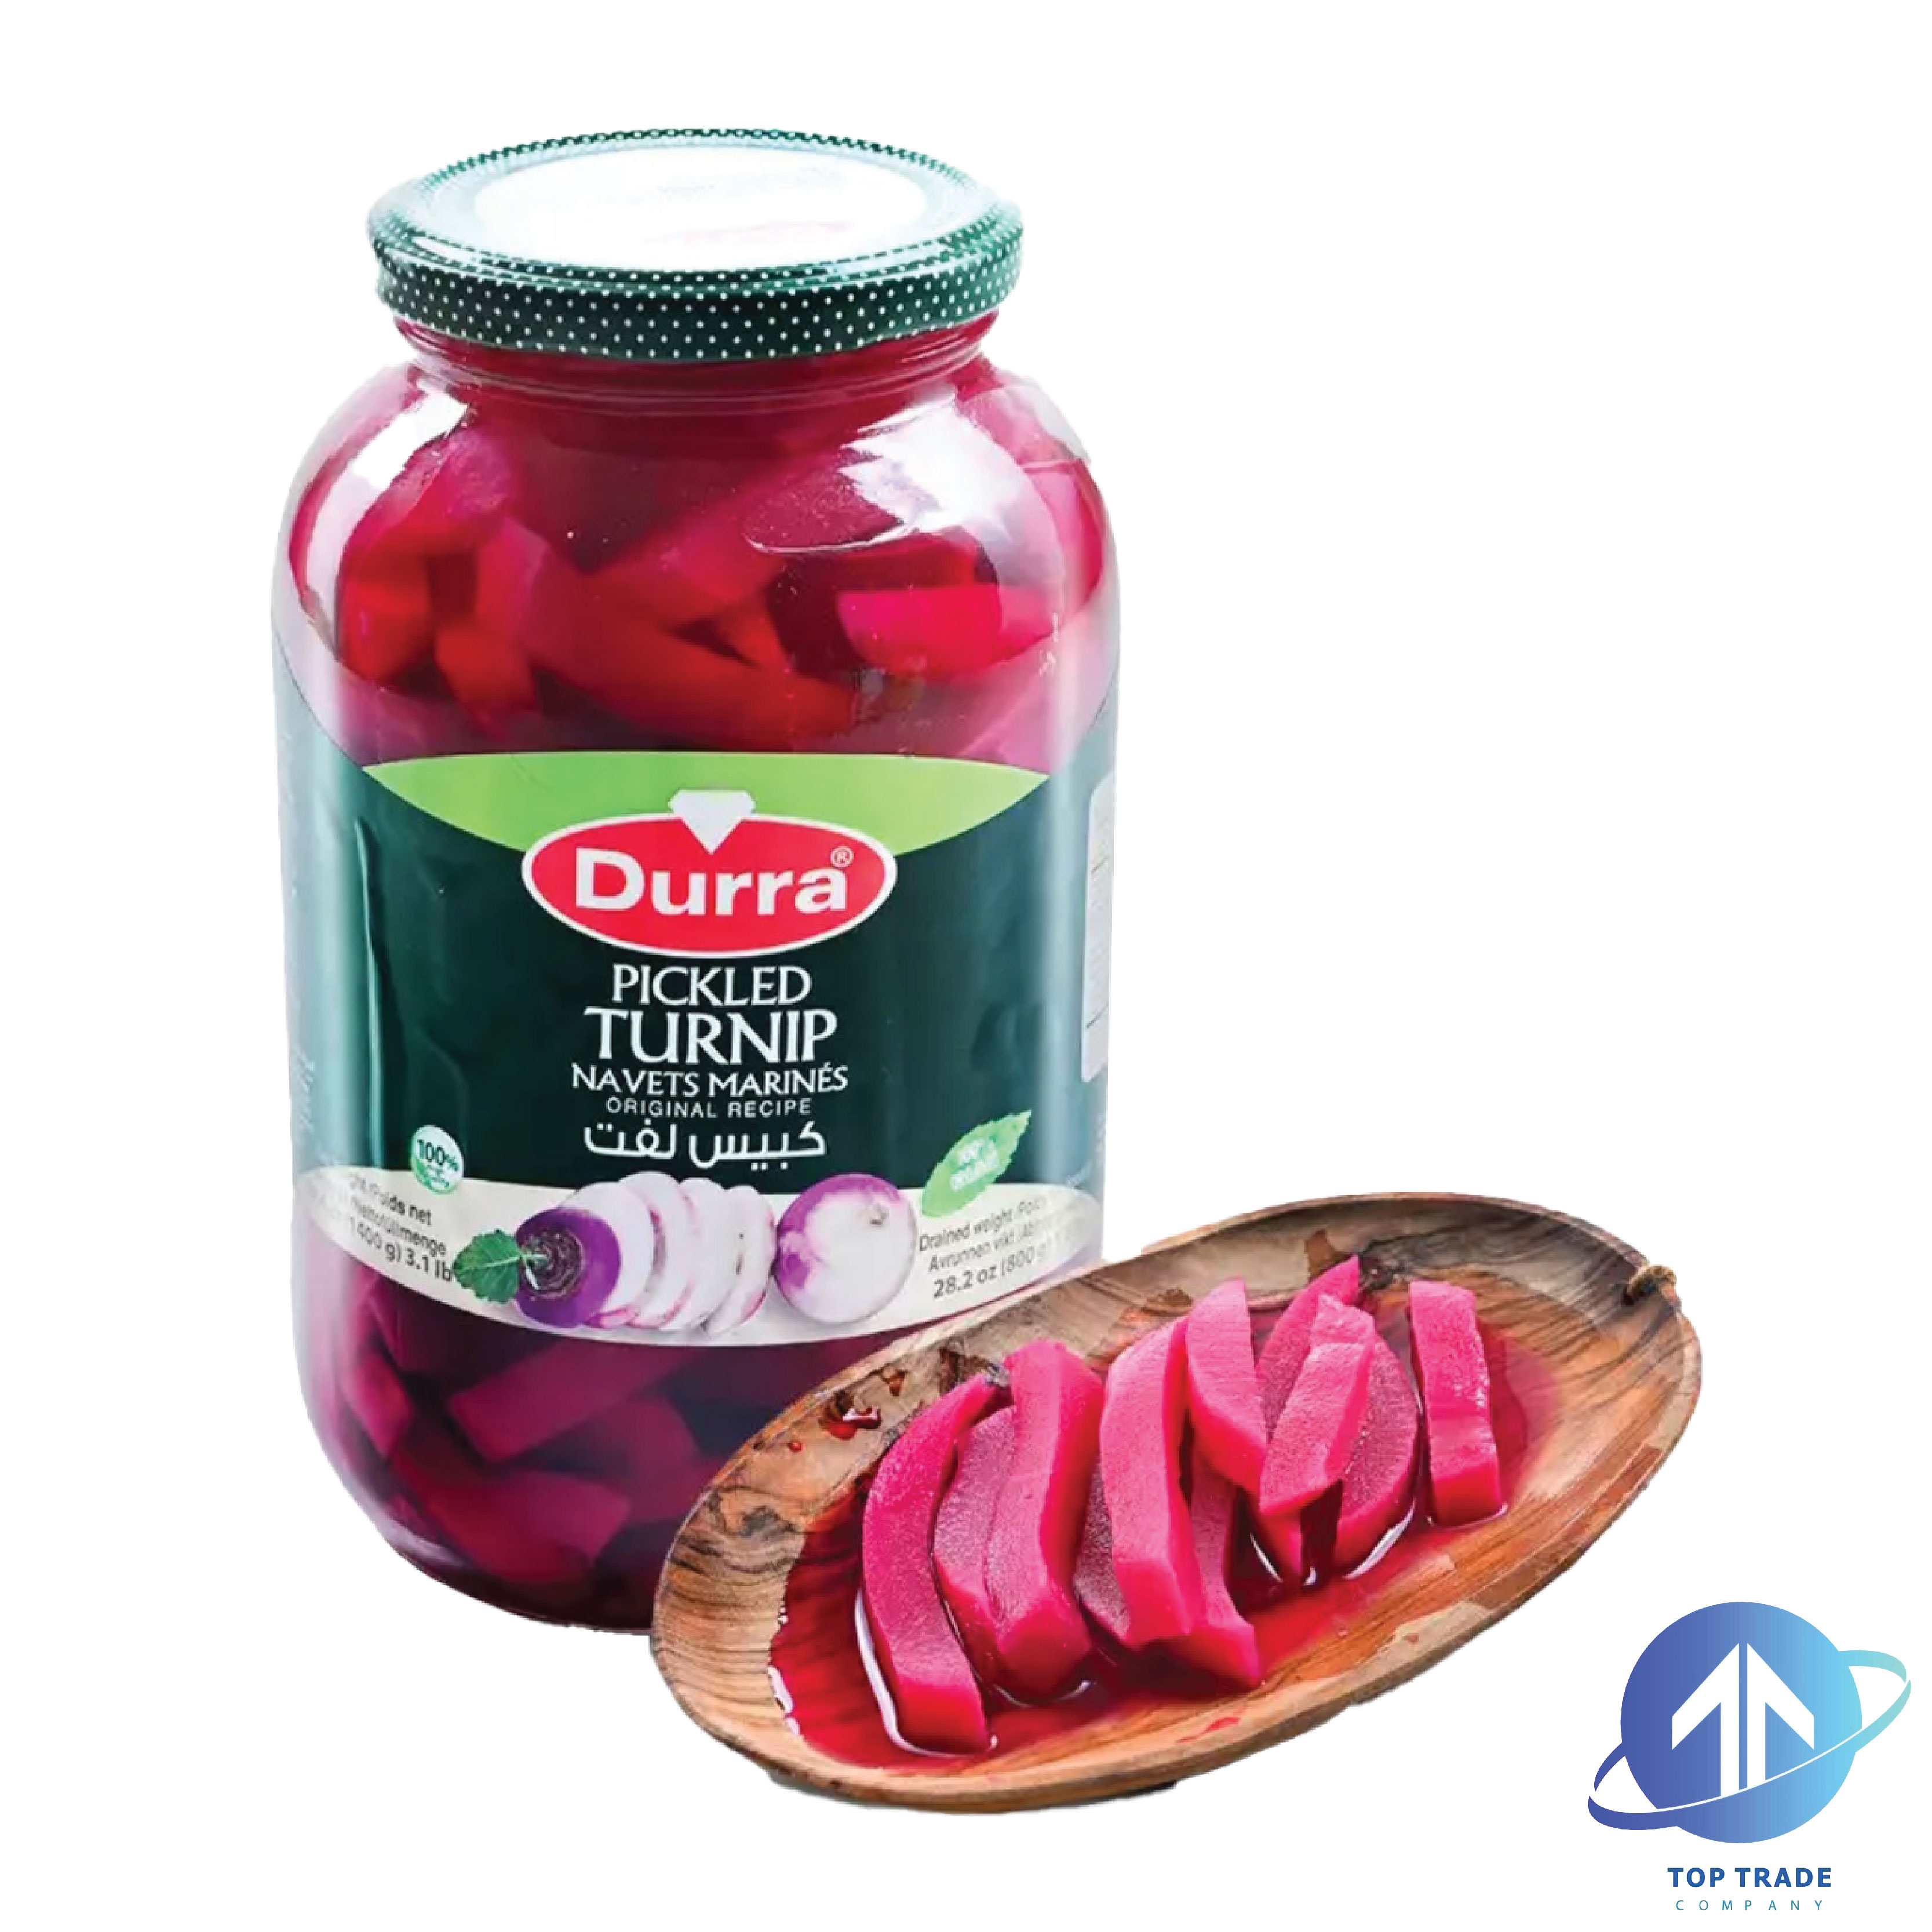 Durra Turnips pickle slices 1,4KG